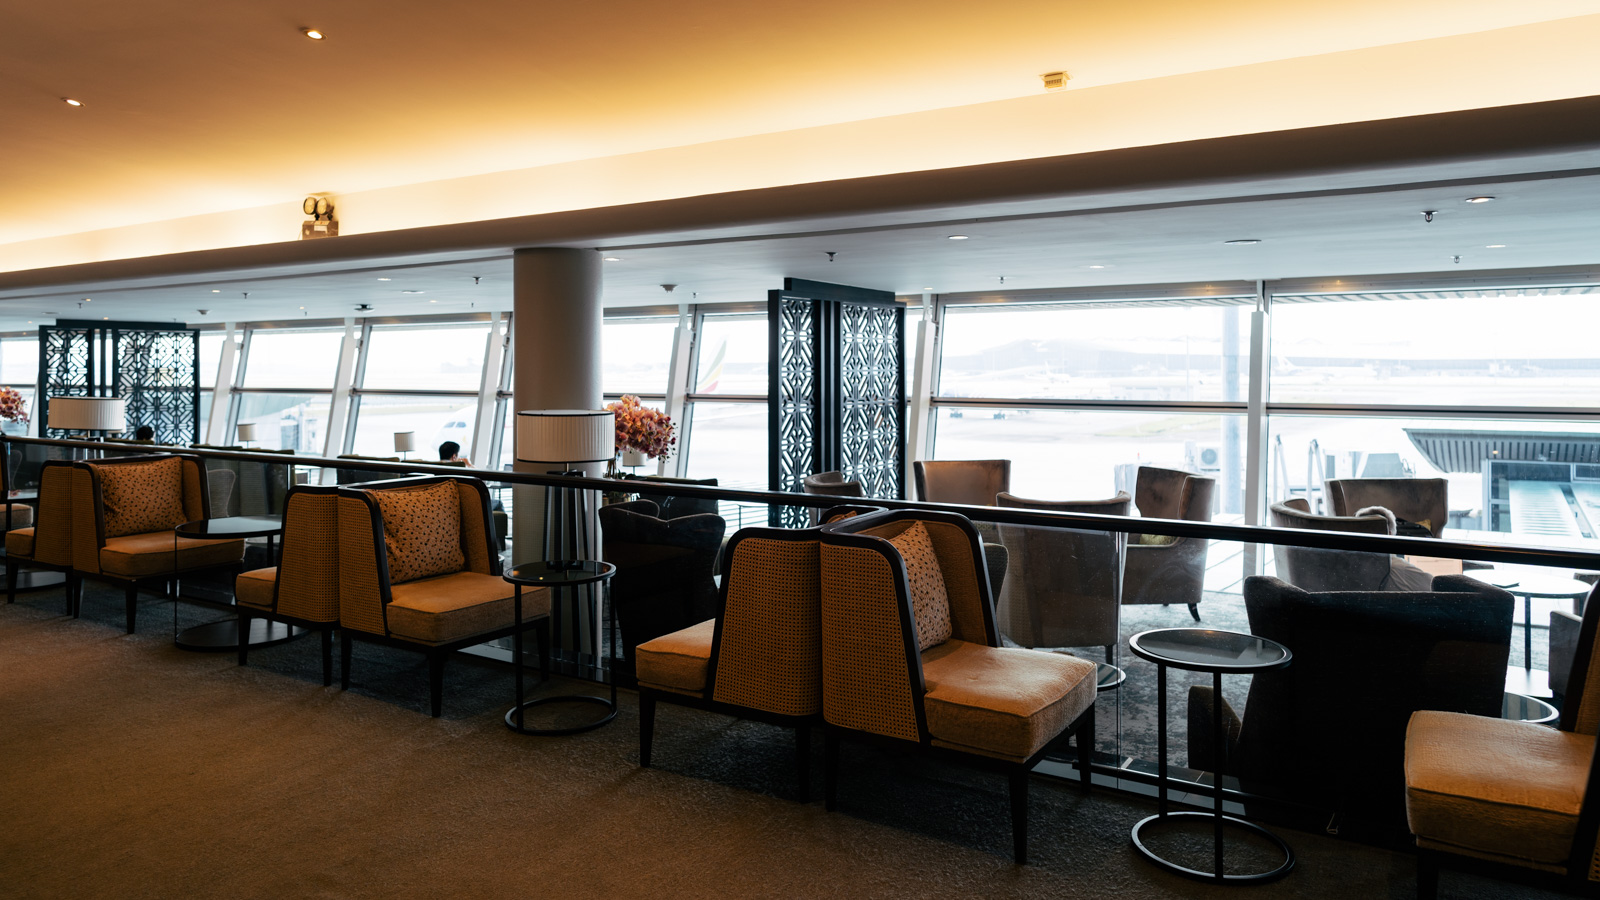 Malaysia Airlines Platinum Lounge mezzanine level